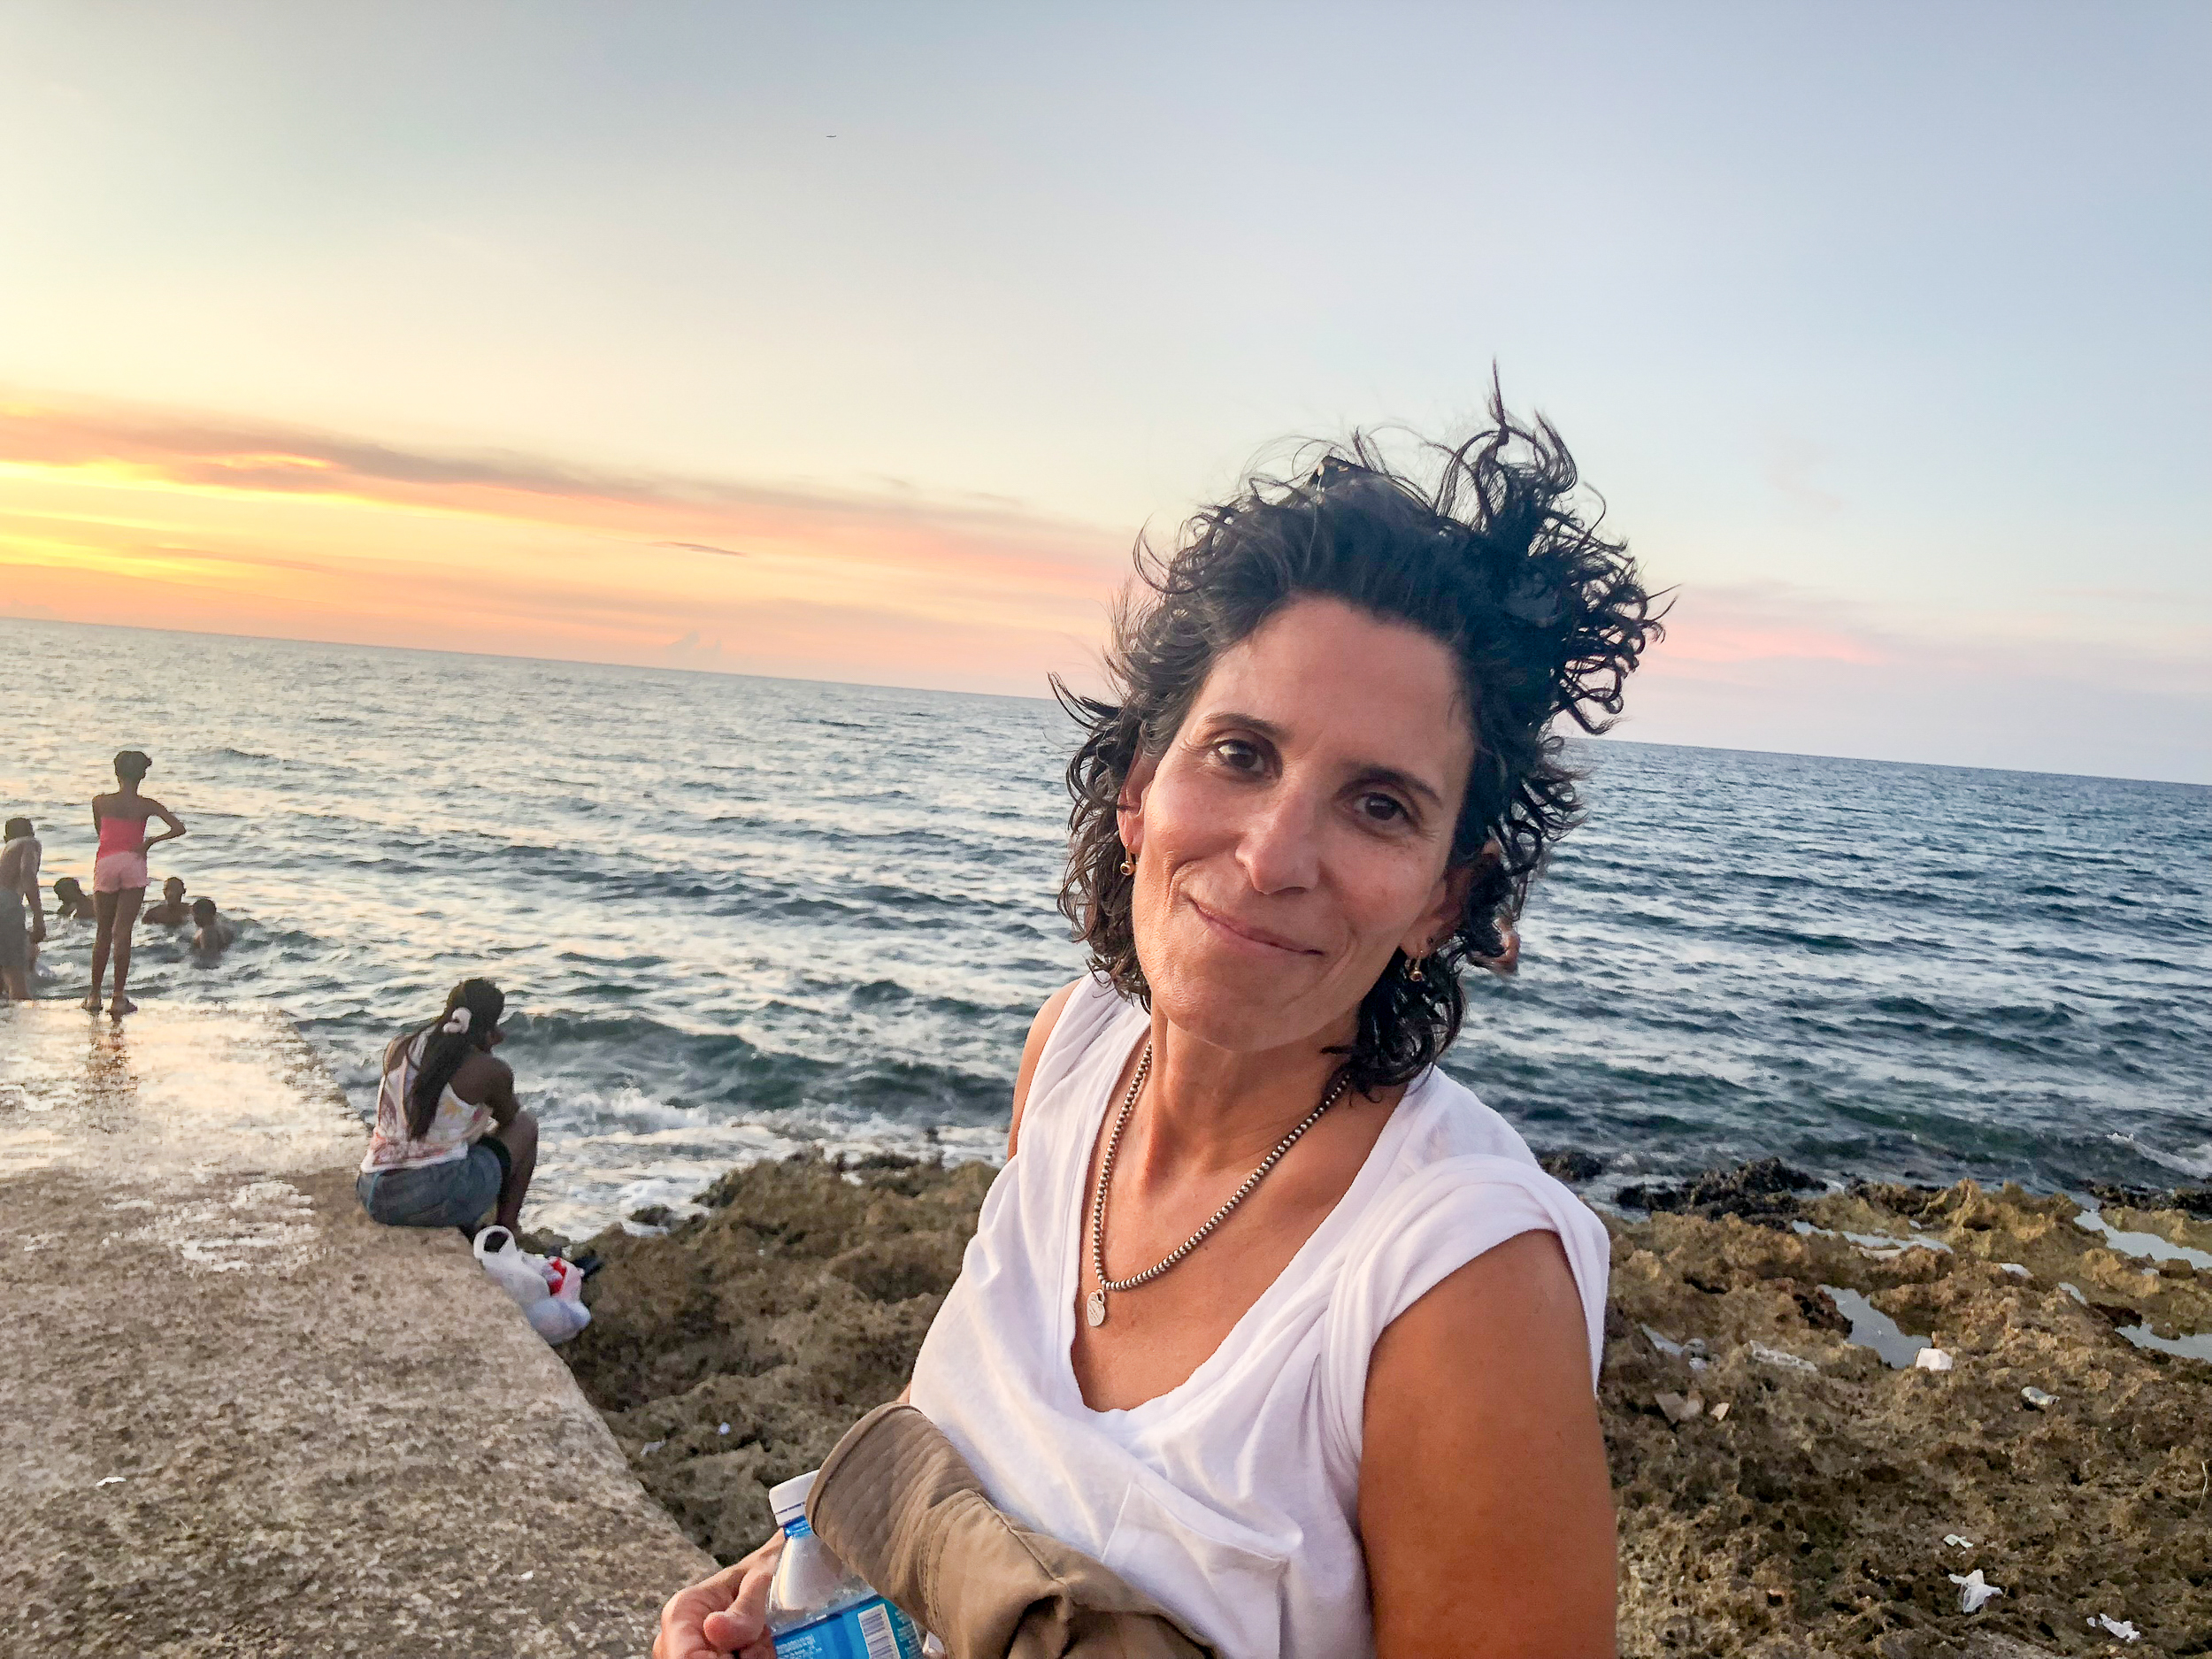 Christiane Arbesu in Cuba. COURTESY THE ARTIST